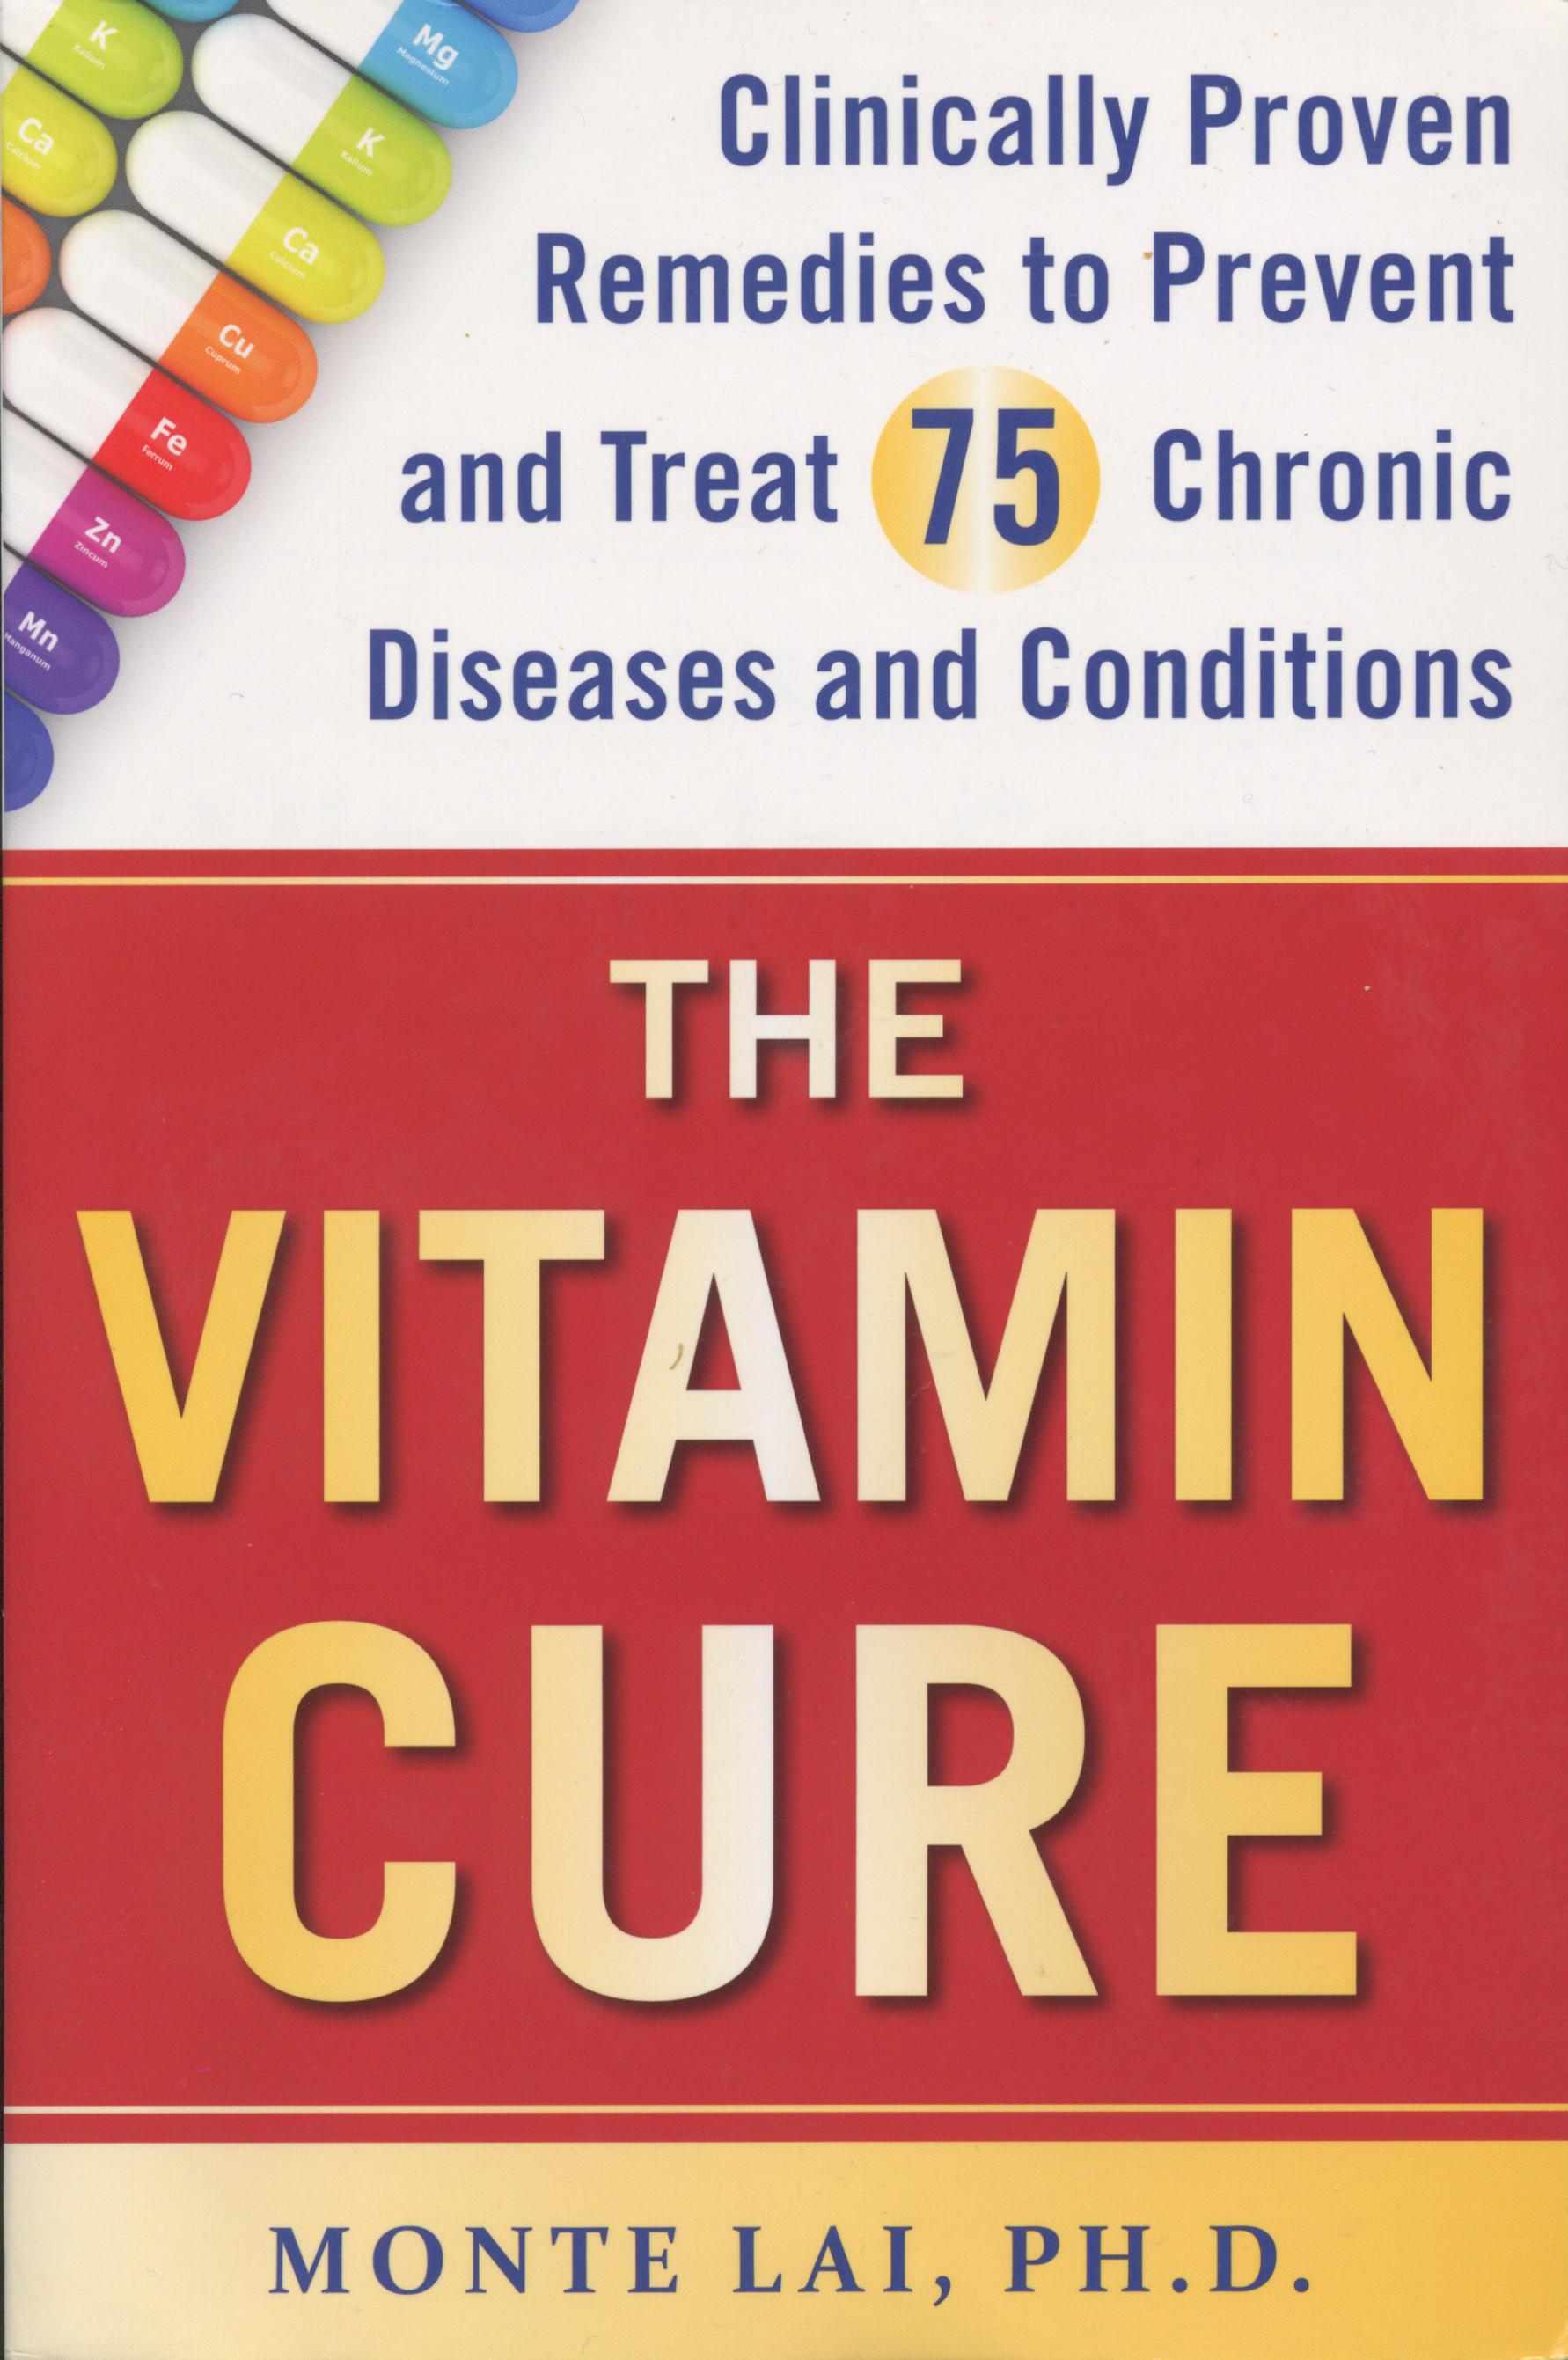 1271. The Vitamin Cure/Monte Lai, Ph.D./2018